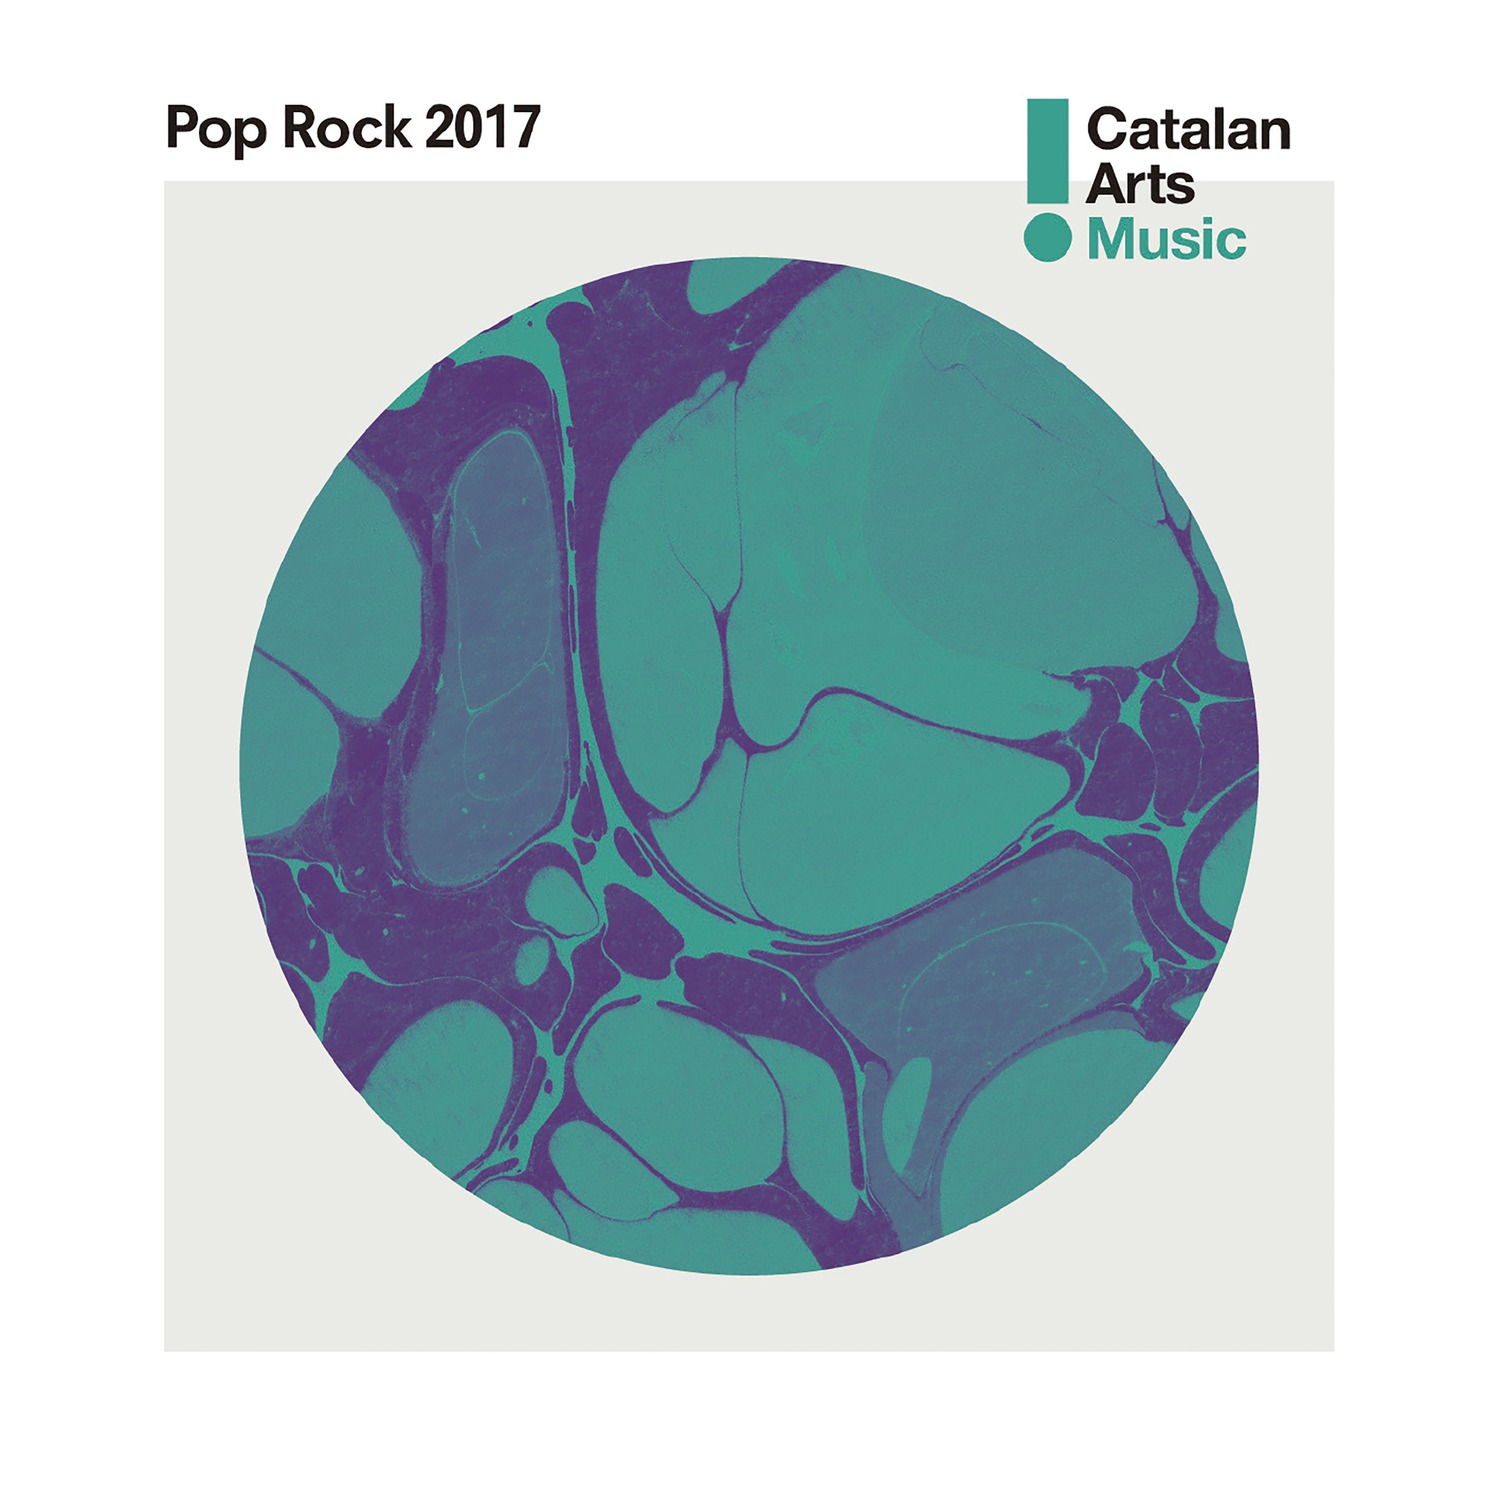 Pop-Rock from Catalonia 2017